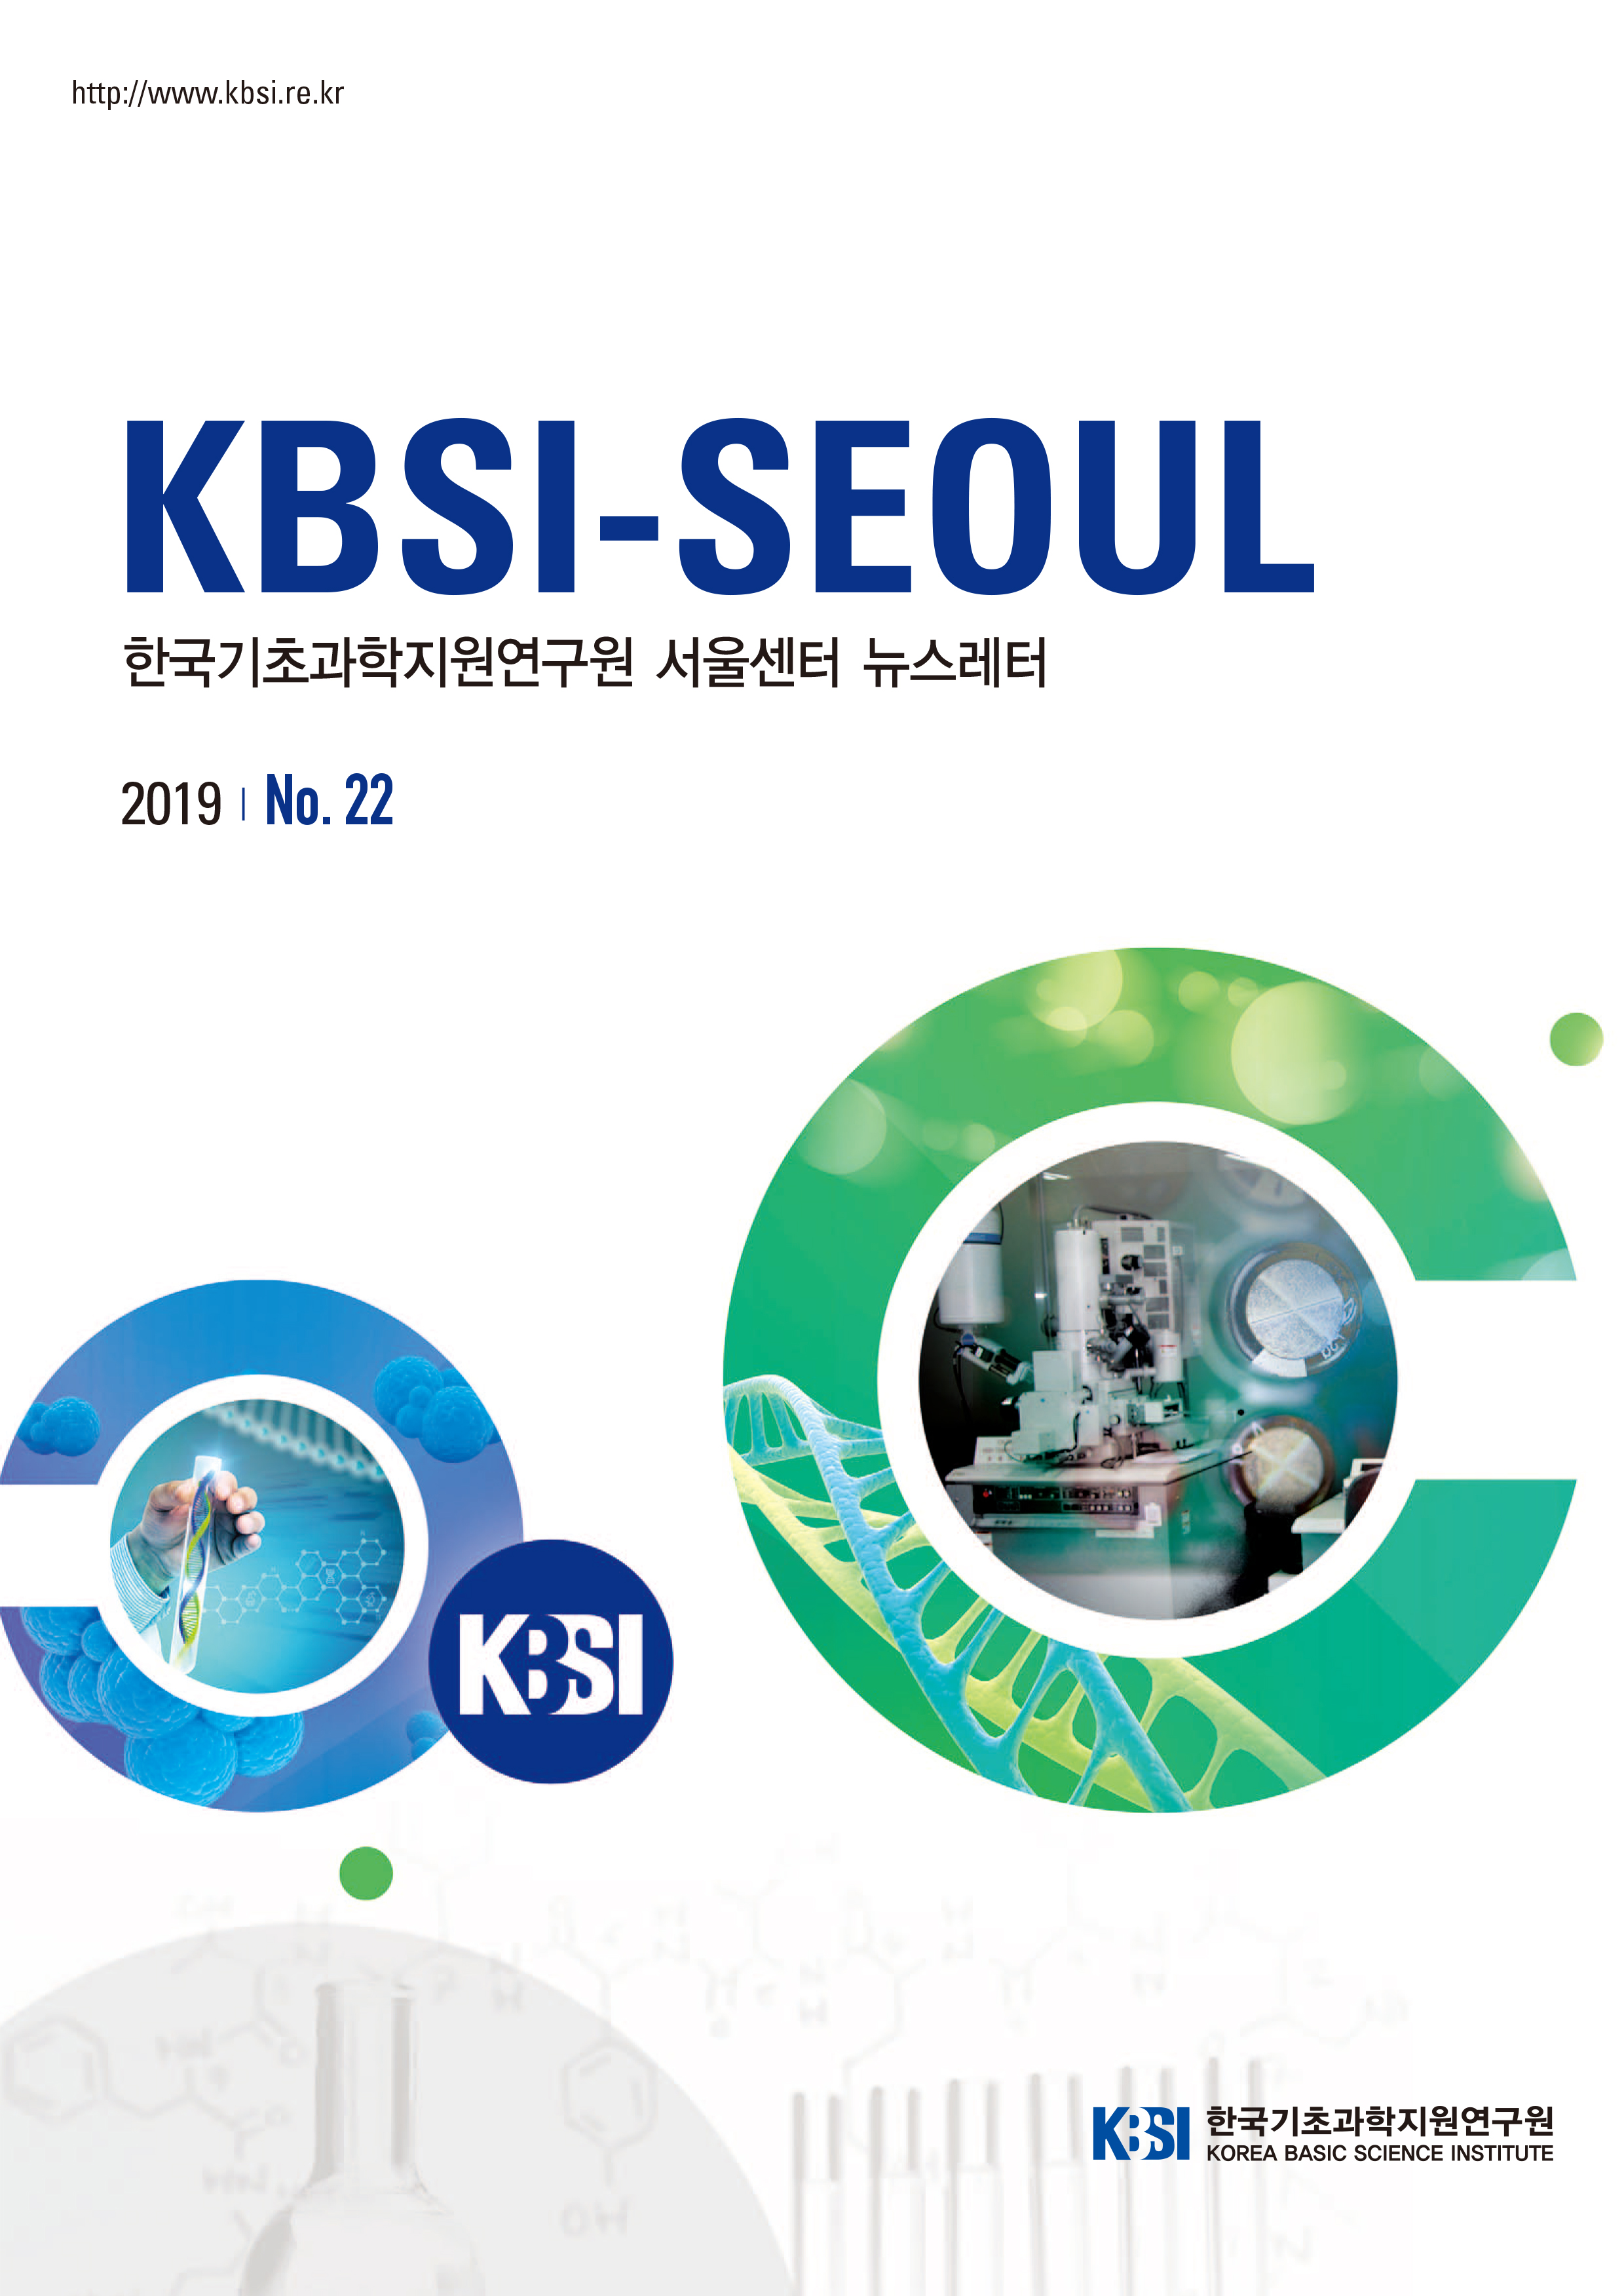 KBSI-SEOUL 한국기초과학지원연구원 서울센터 뉴스레터 2019 No.22 한국기초과학지원연구원 자세한 내용은 첨부파일을 참조하세요